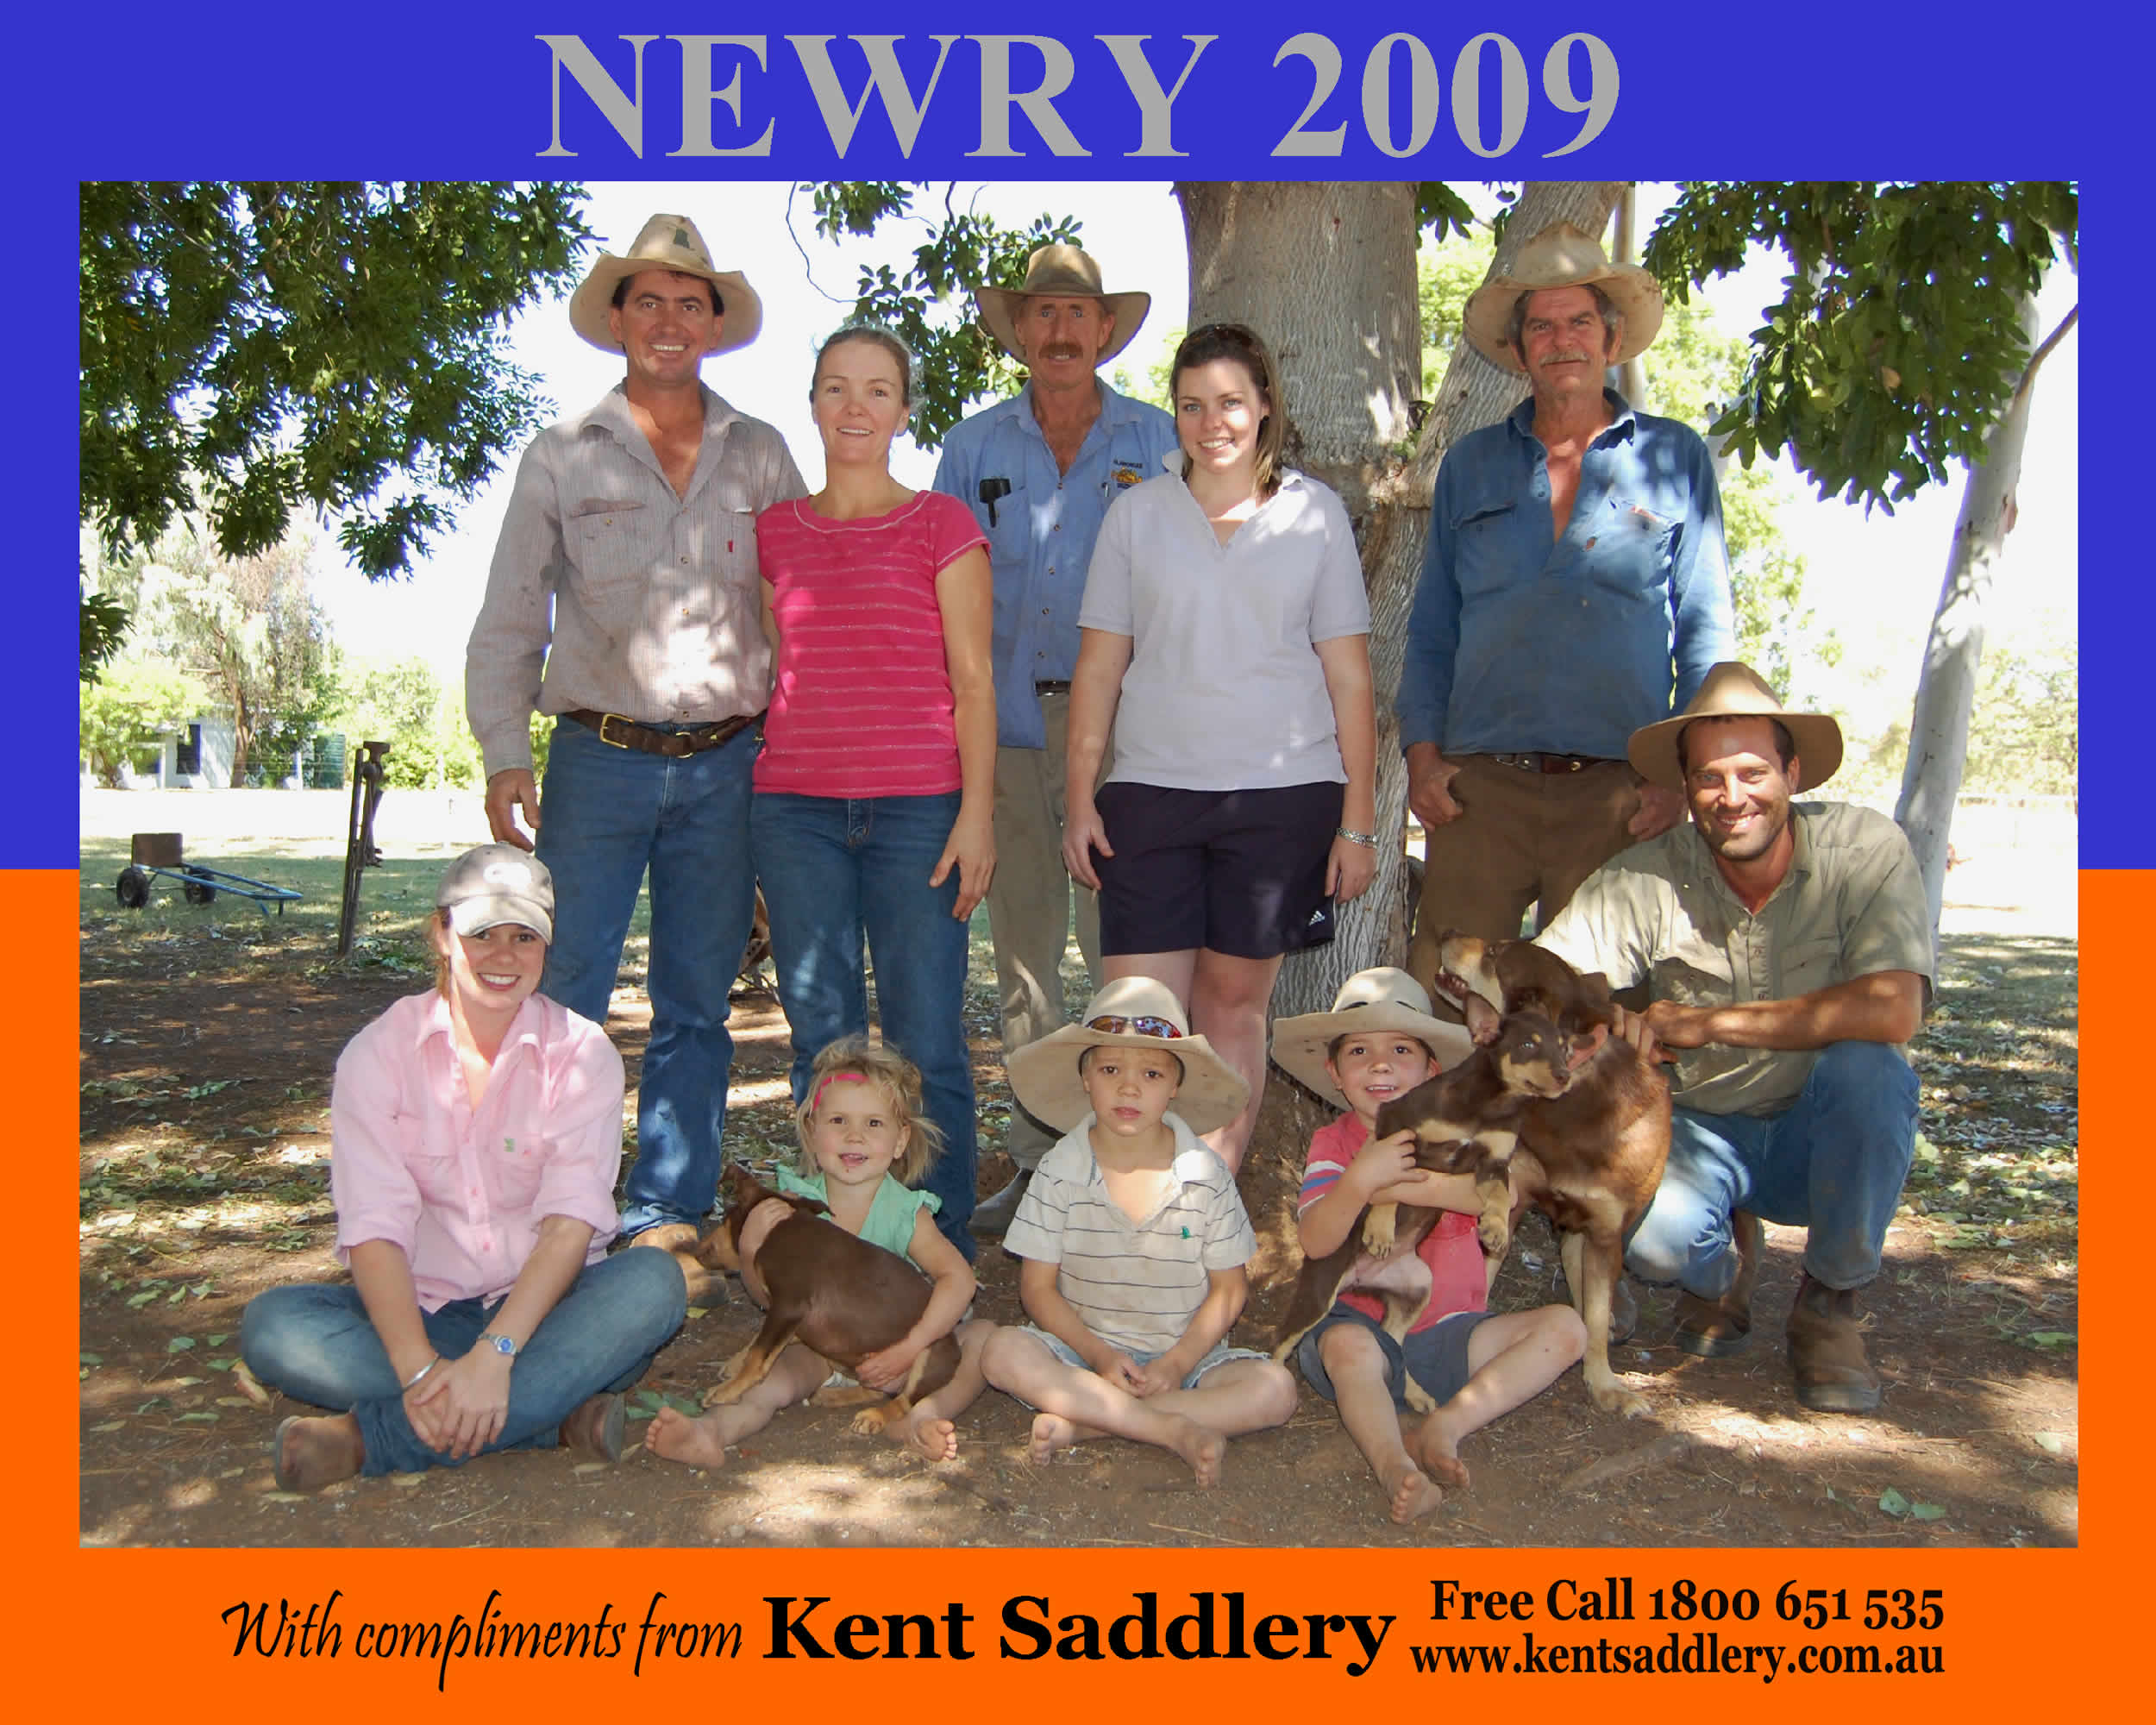 Northern Territory - Newry 30